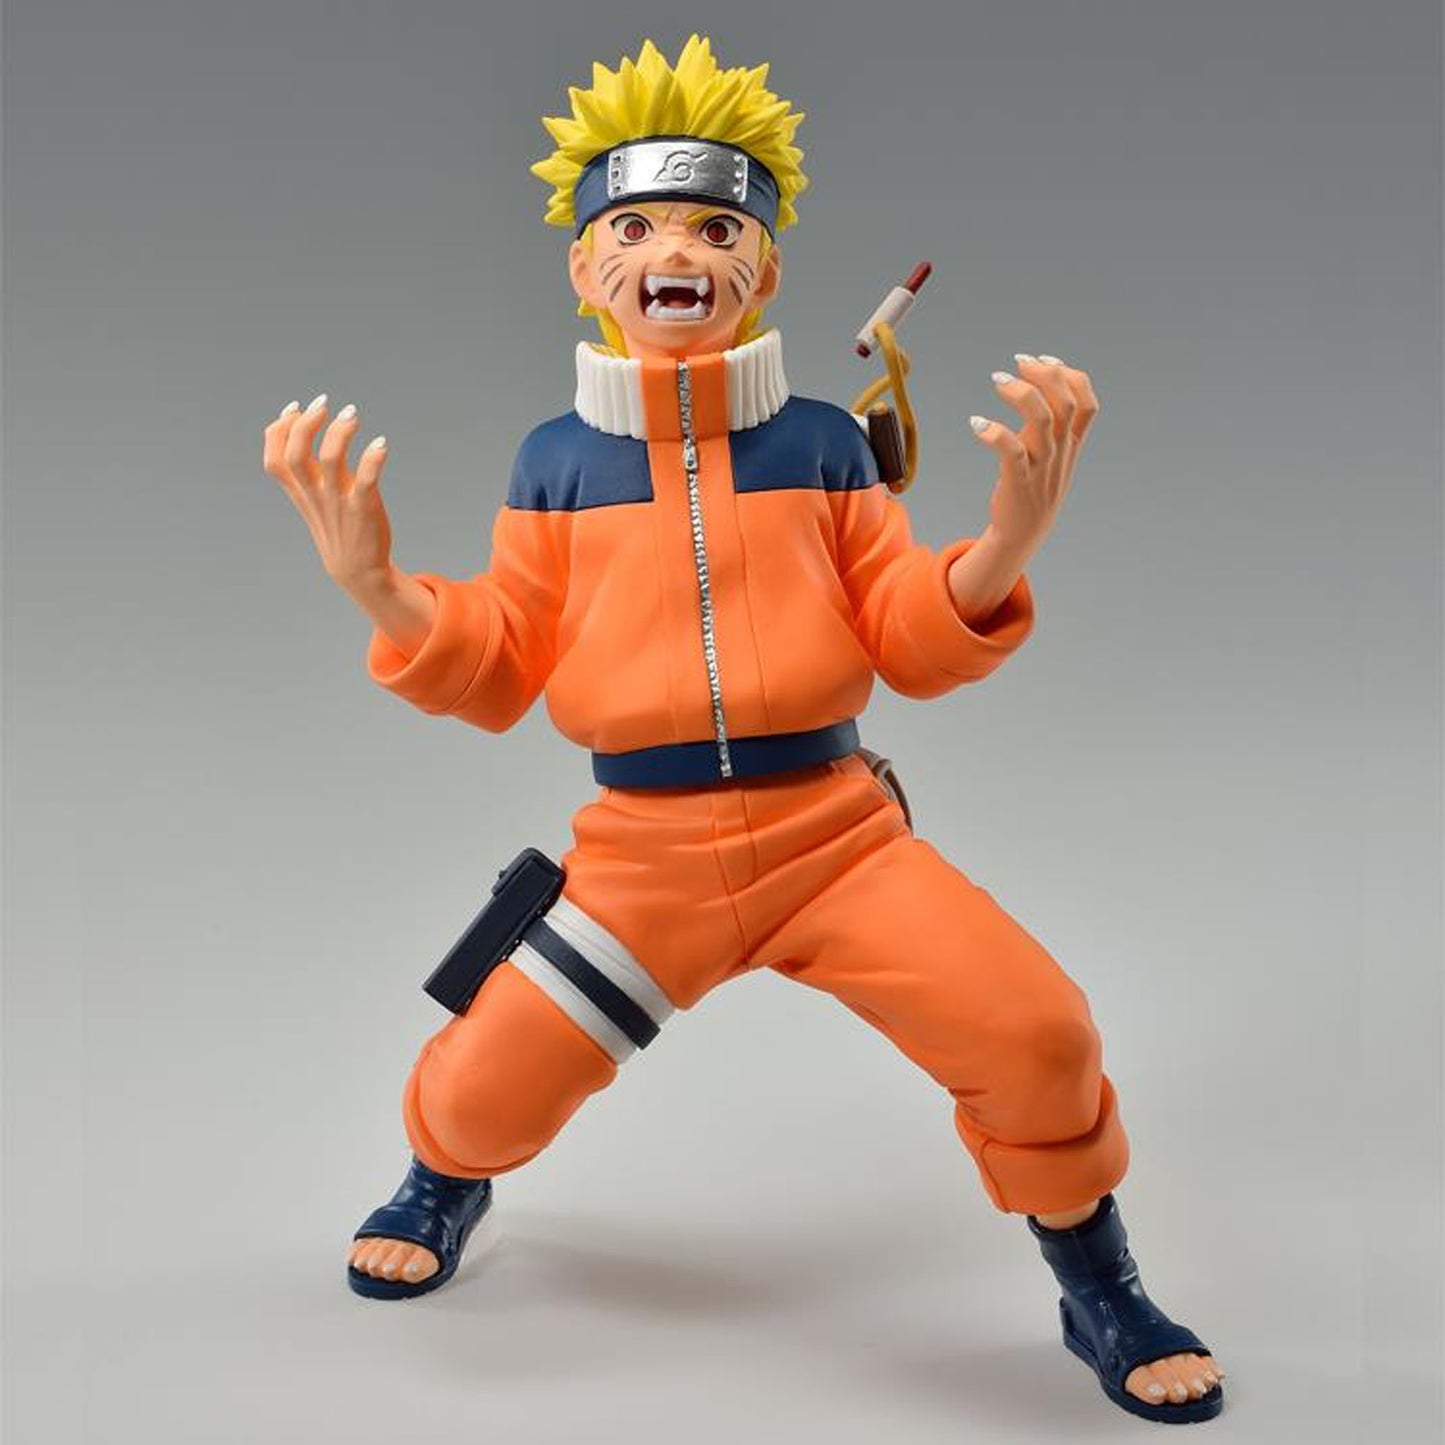 Naruto Uzumaki (Naruto Shippuden) Angry Vibration Stars Statue